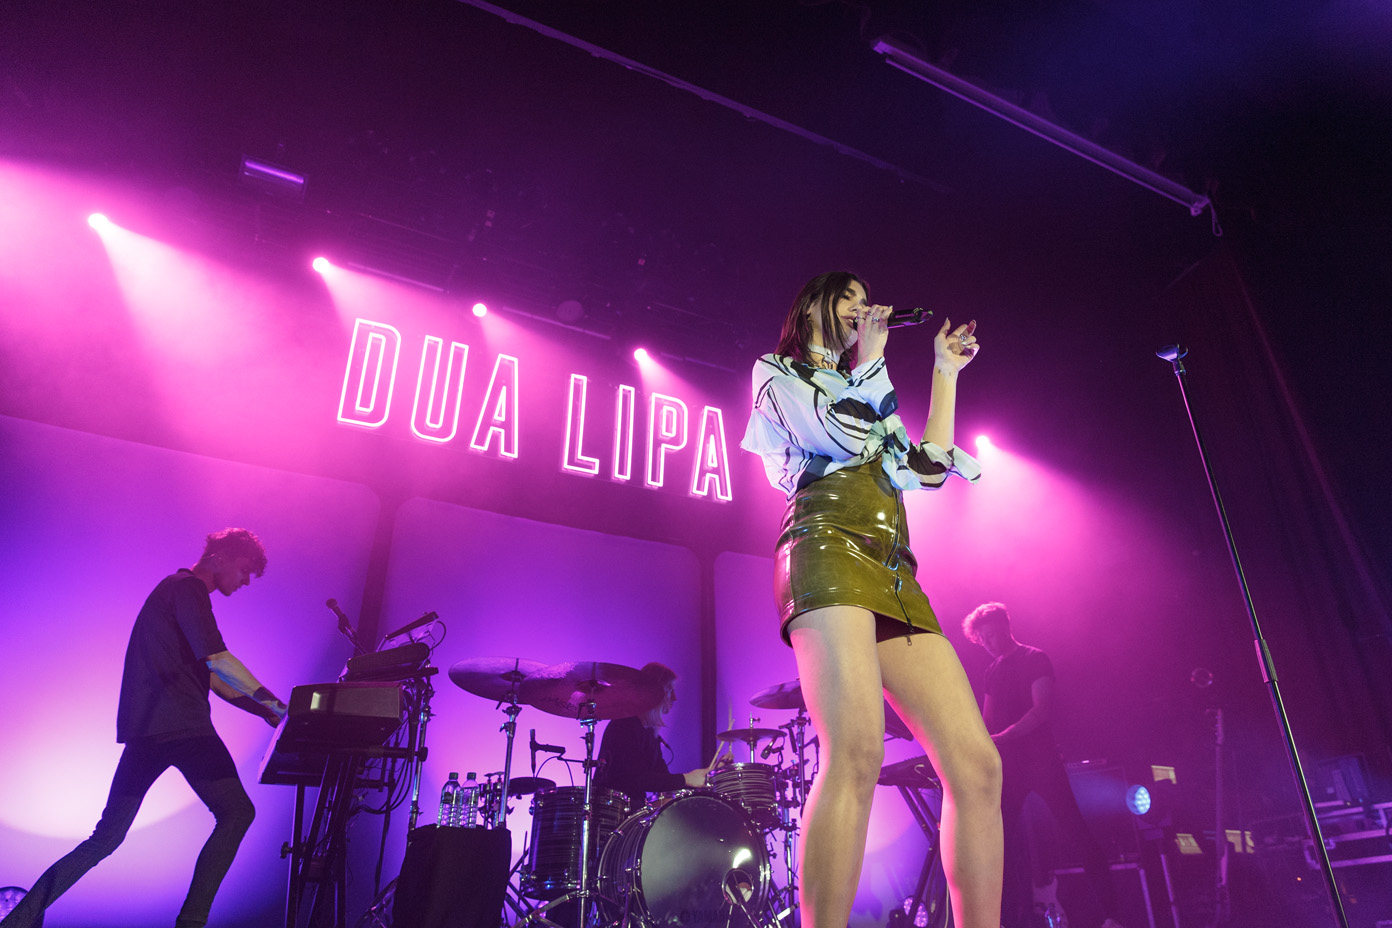 Dua Lipa on stage at the O2 Ritz Manchester on 12 April 2017. Photo: Katy Blackwood